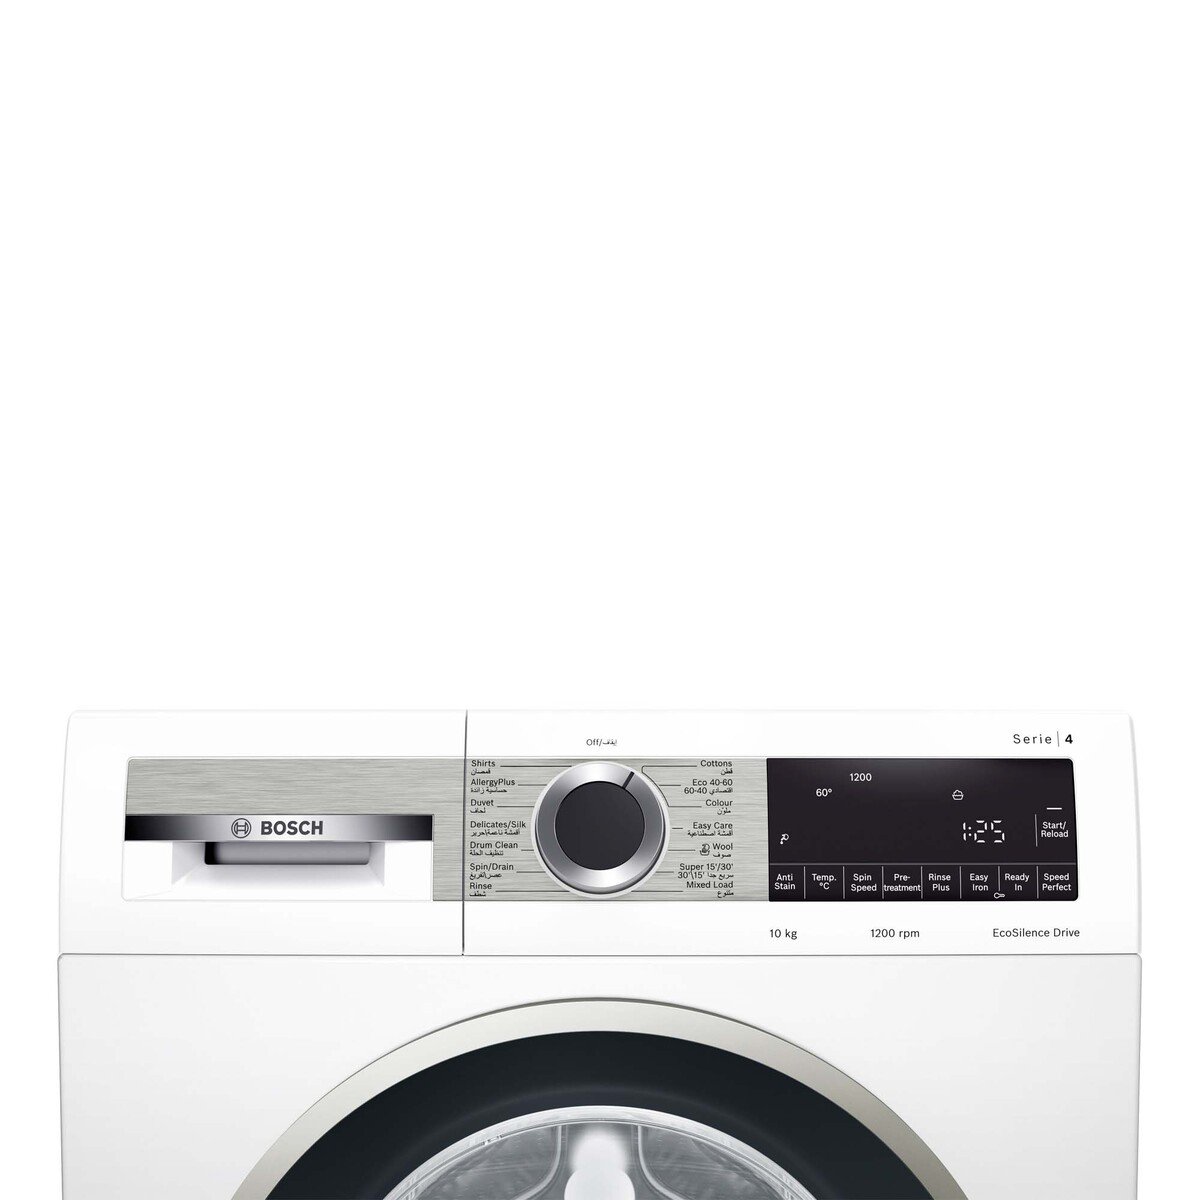 Bosch Front Load Washing Machine WGA252X0GC 10Kg